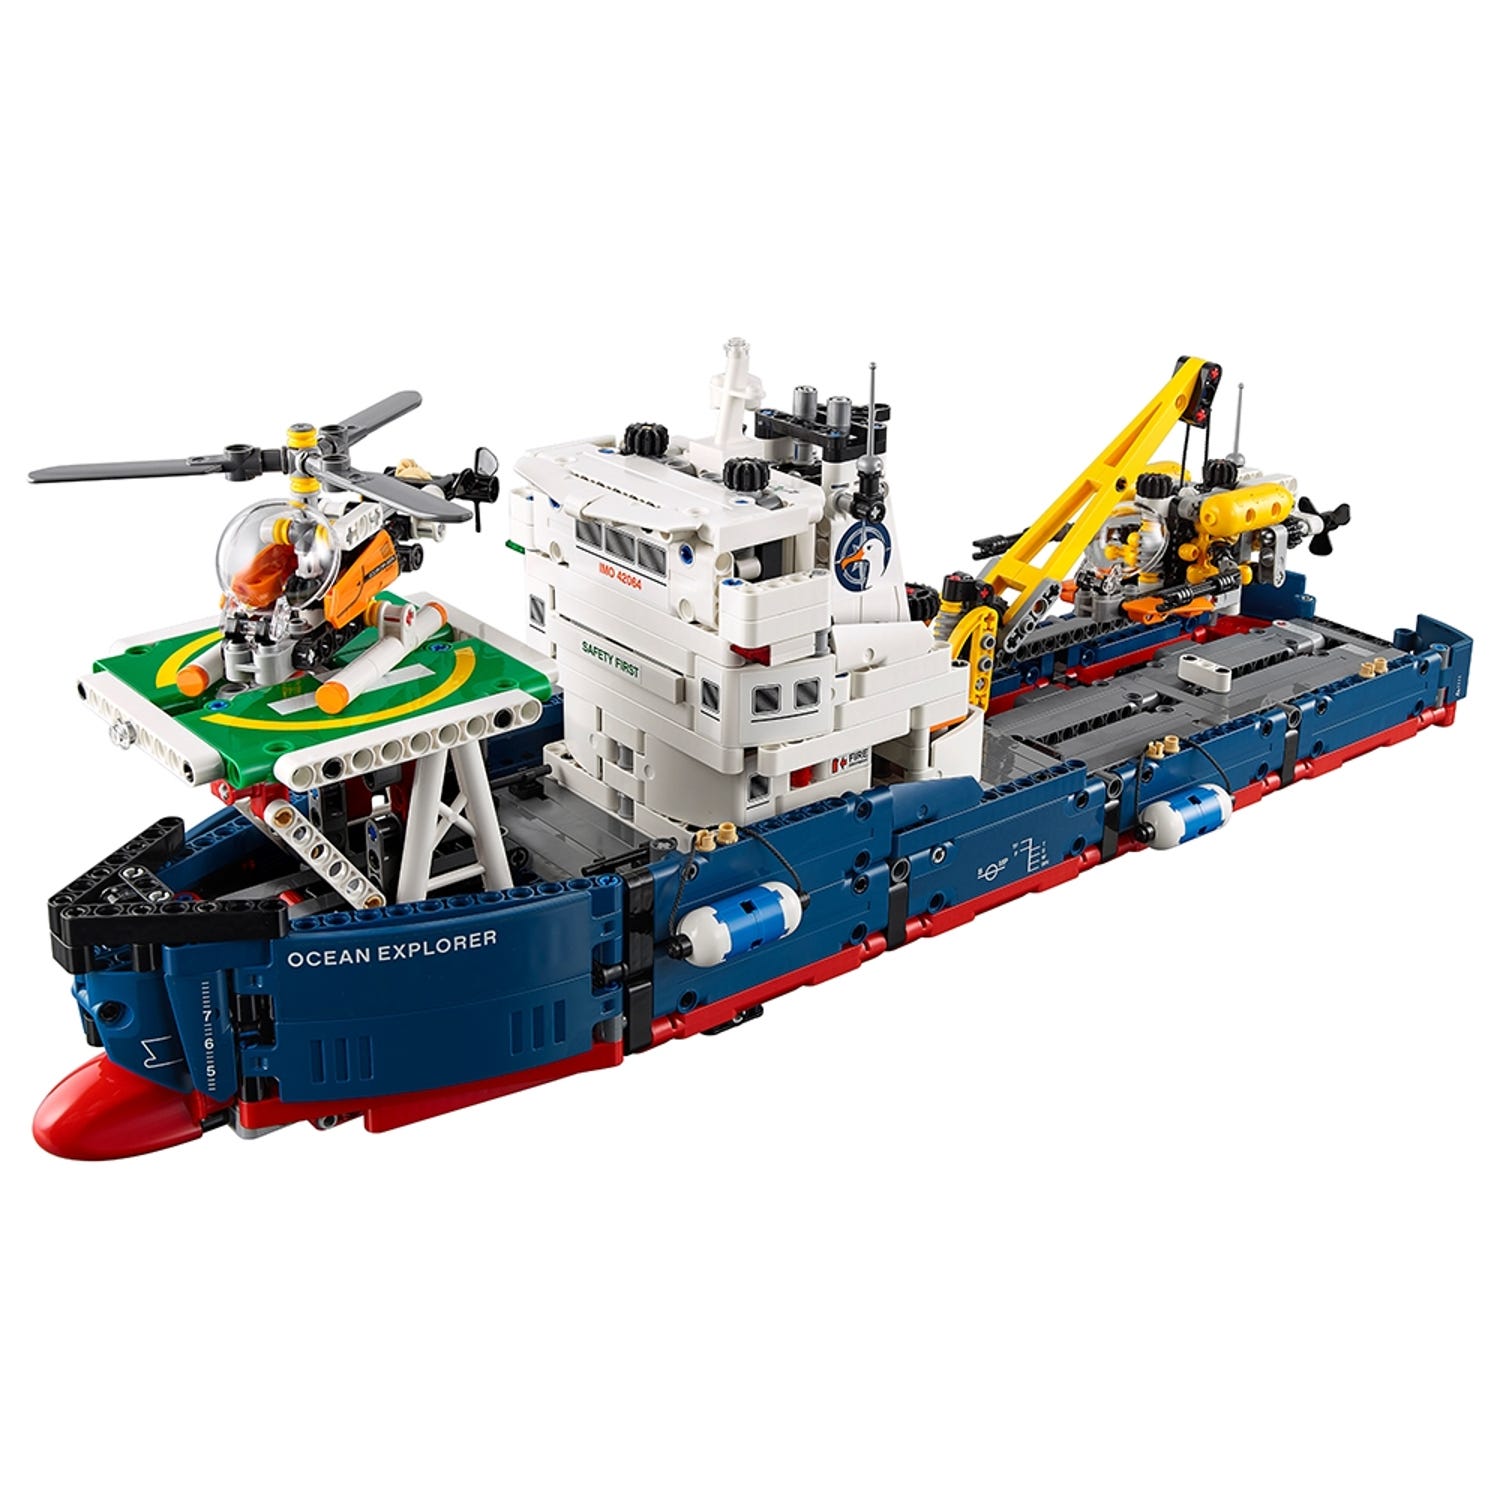 Ocean Explorer 42064 | Technic™ | online at the Official LEGO® Shop US